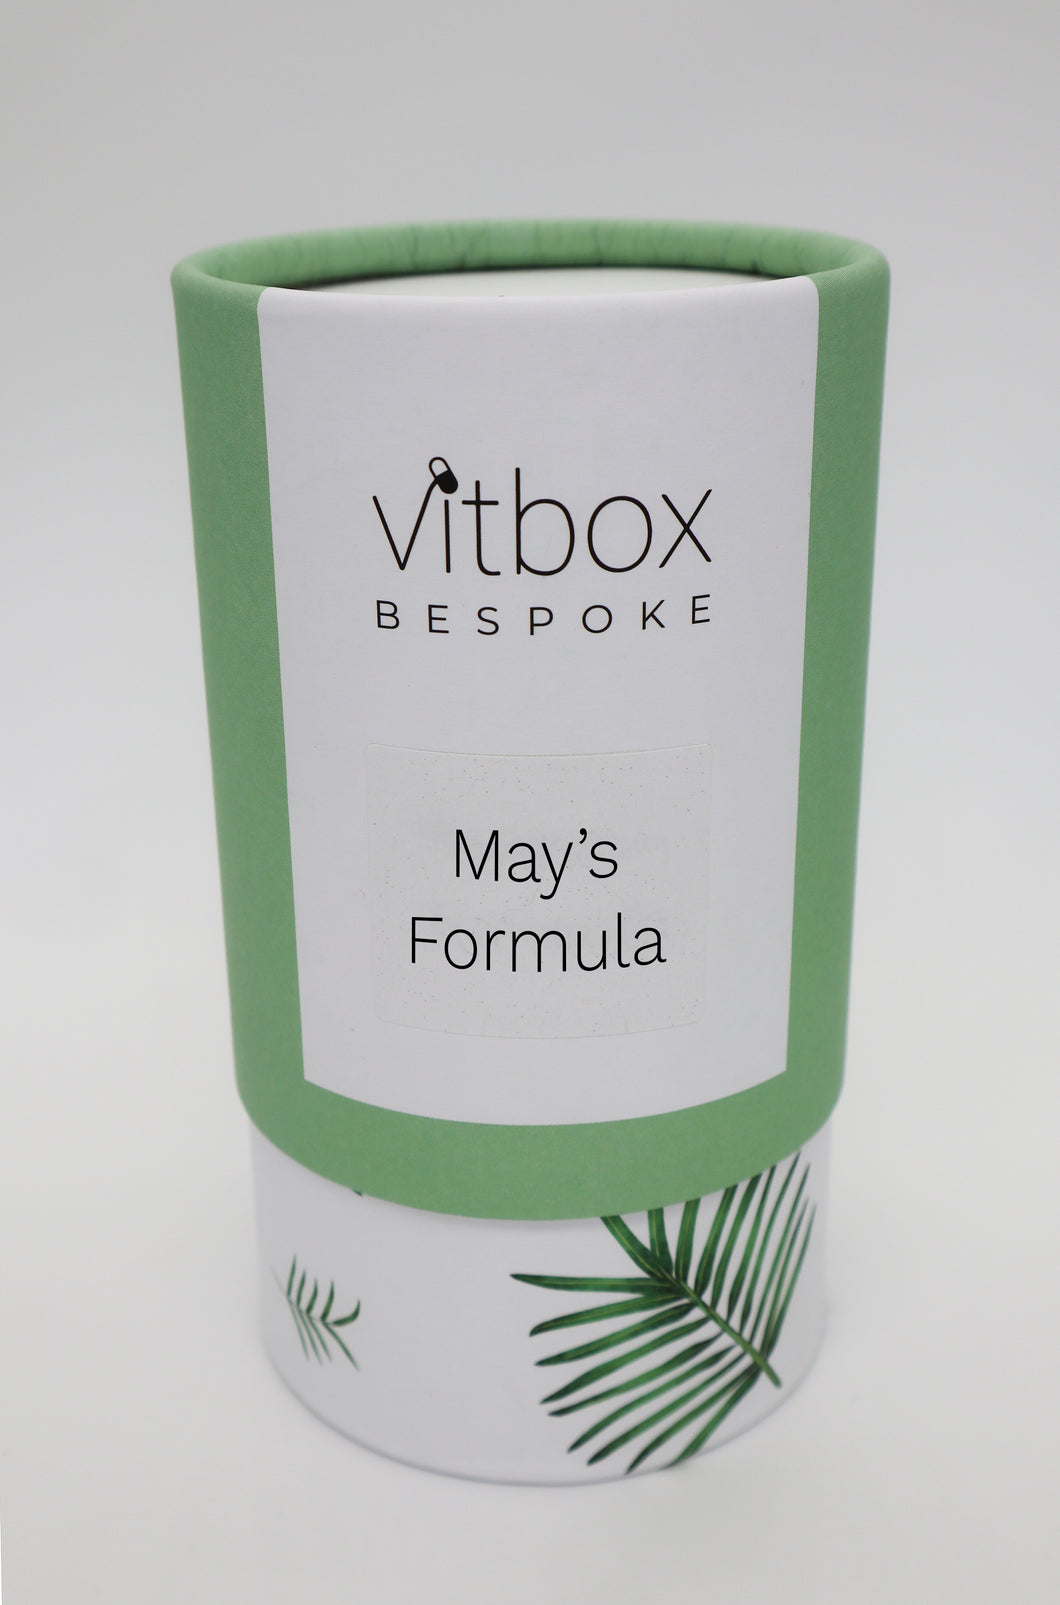 May's Vitbox Bespoke